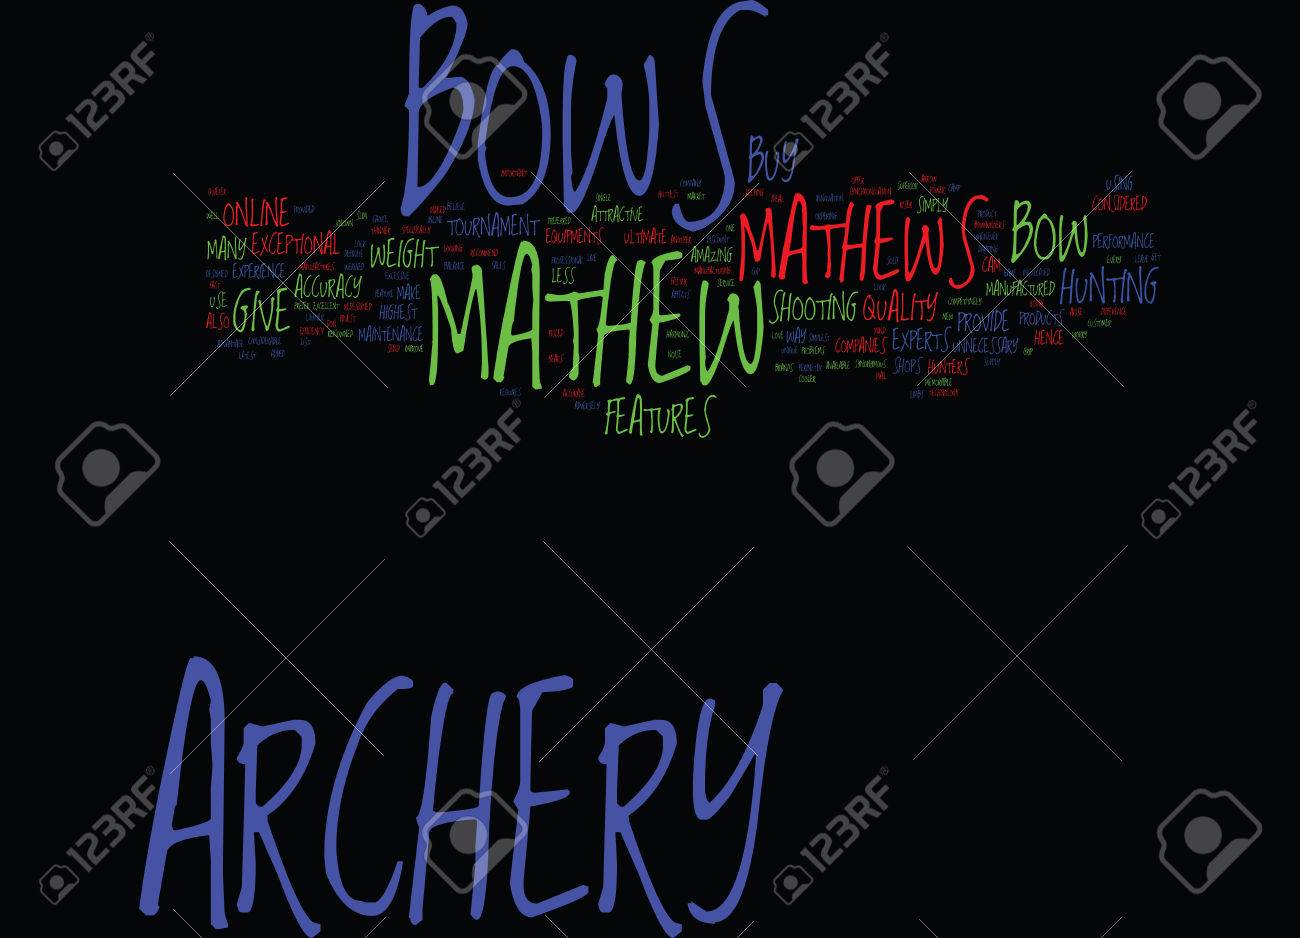 Mathews Archery Text Background Word Cloud Concept Royalty